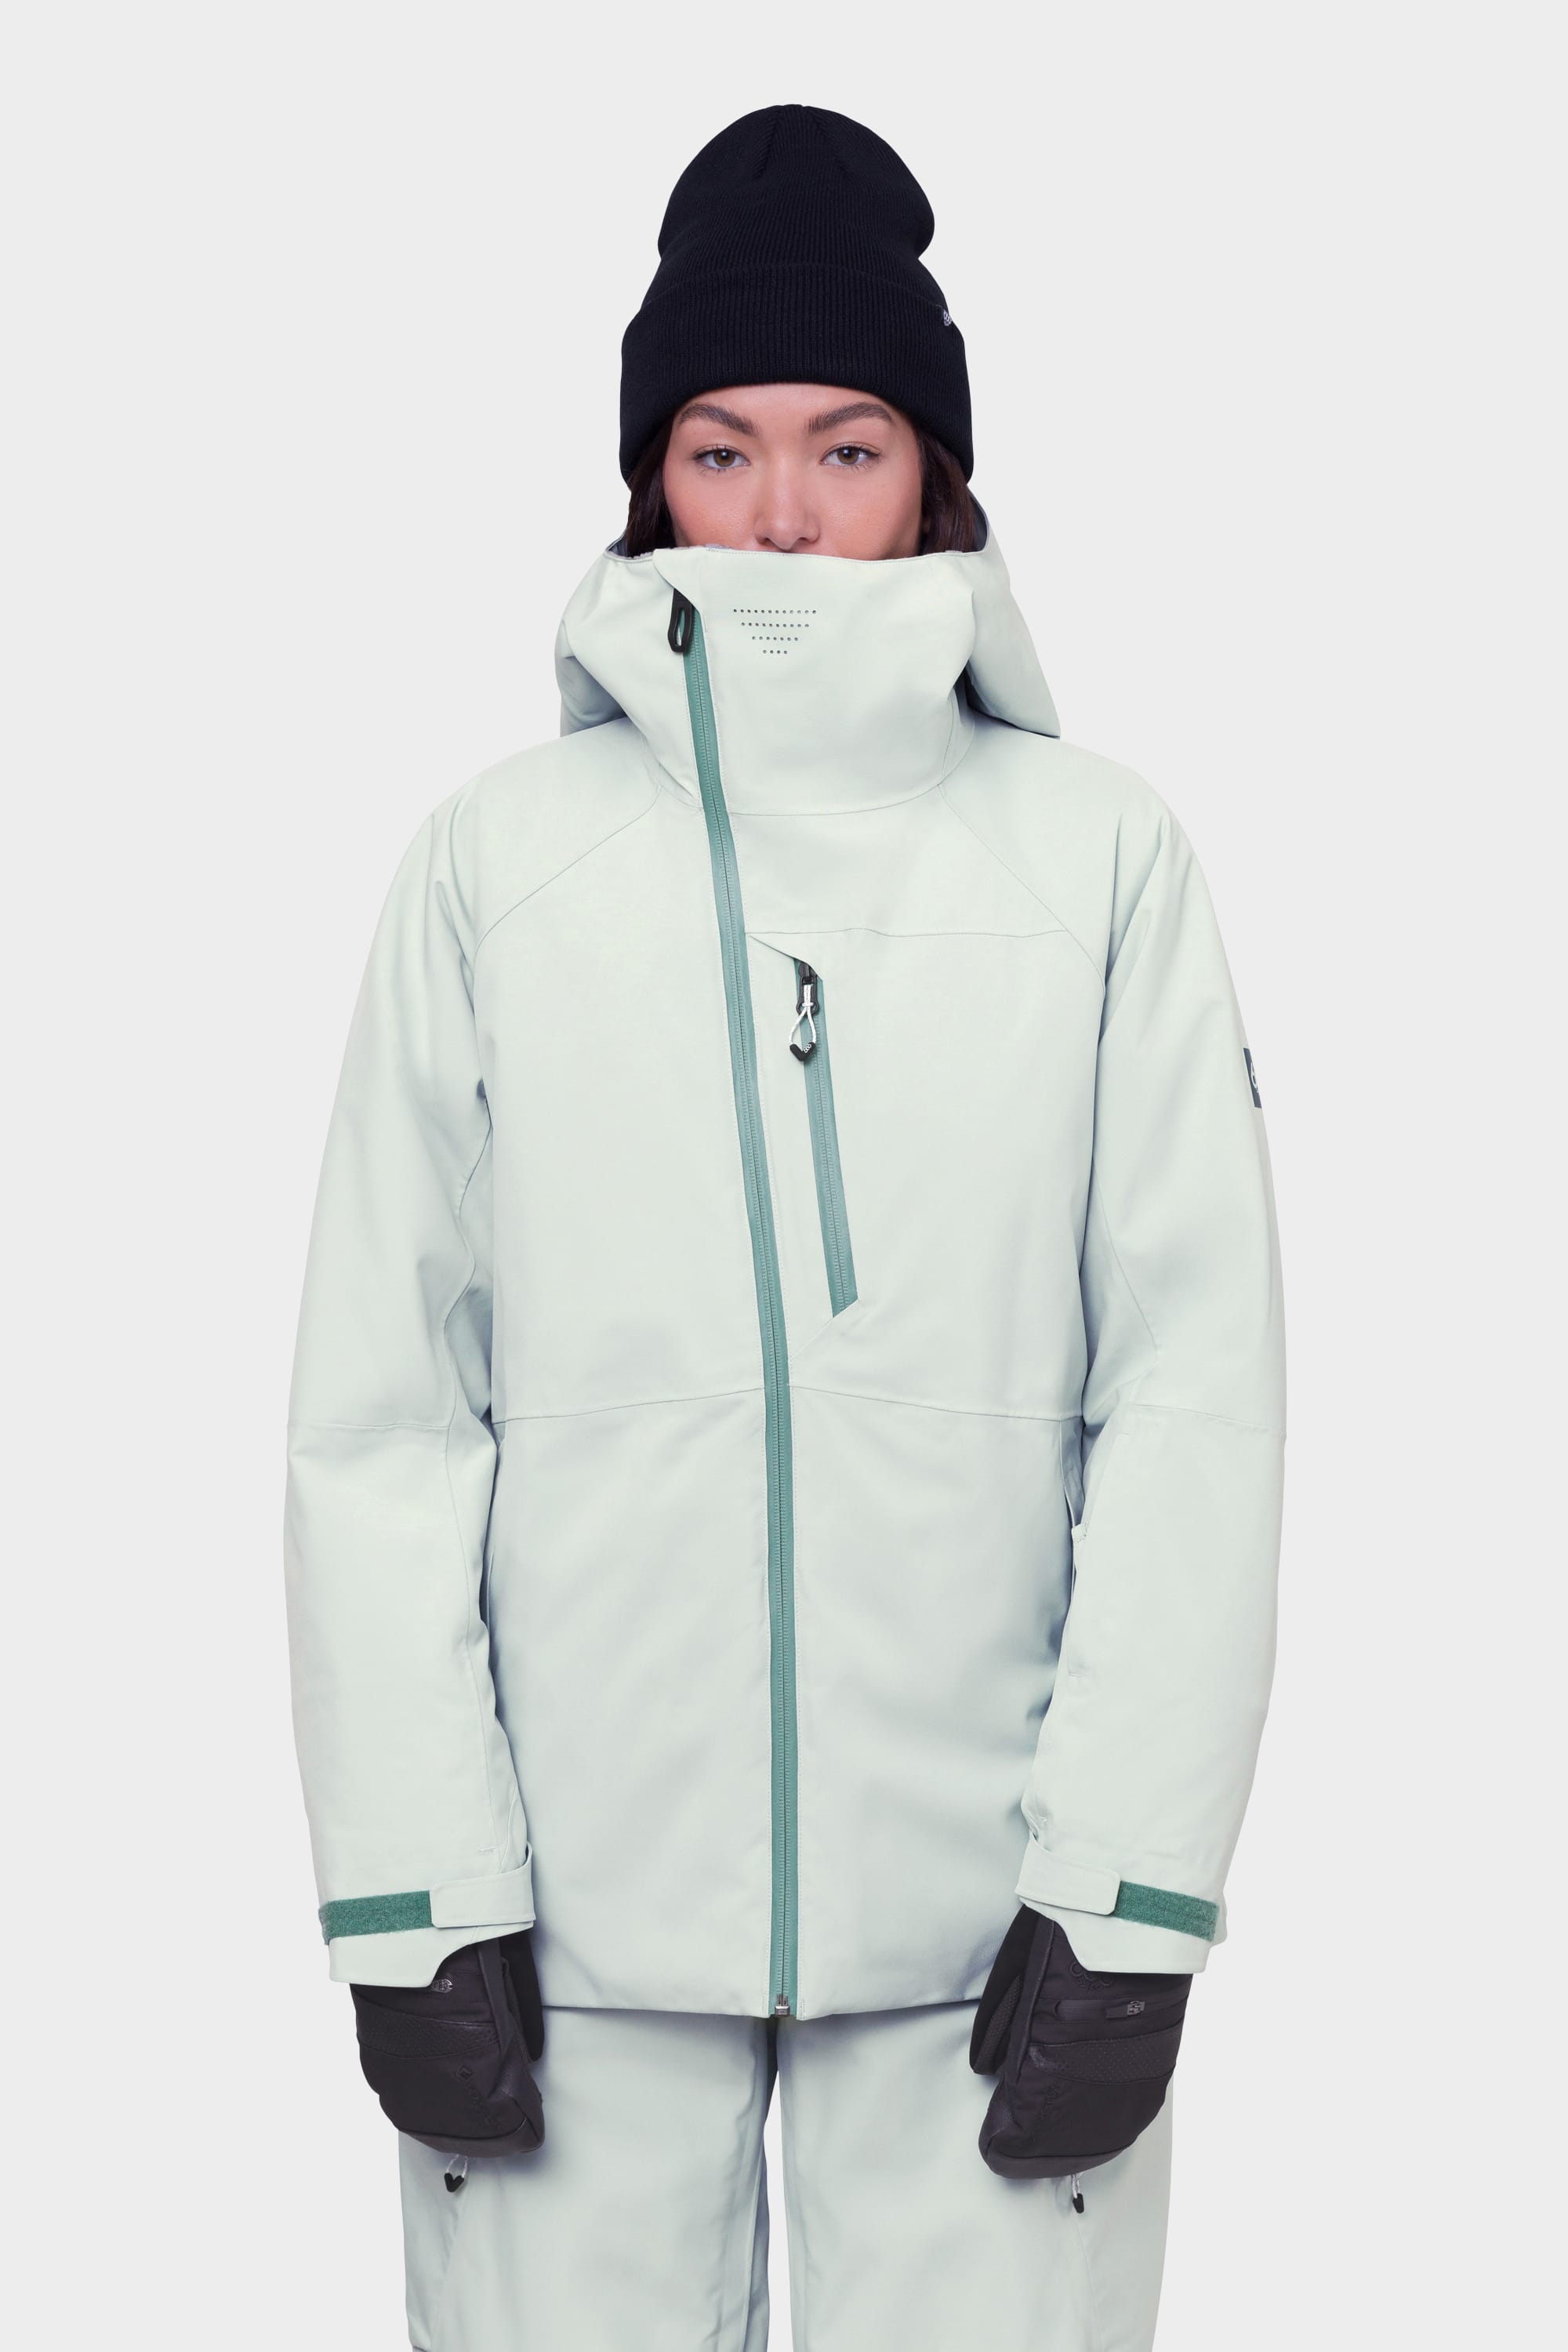 686 Technical Apparel | Women's Snow Jackets – 686.com